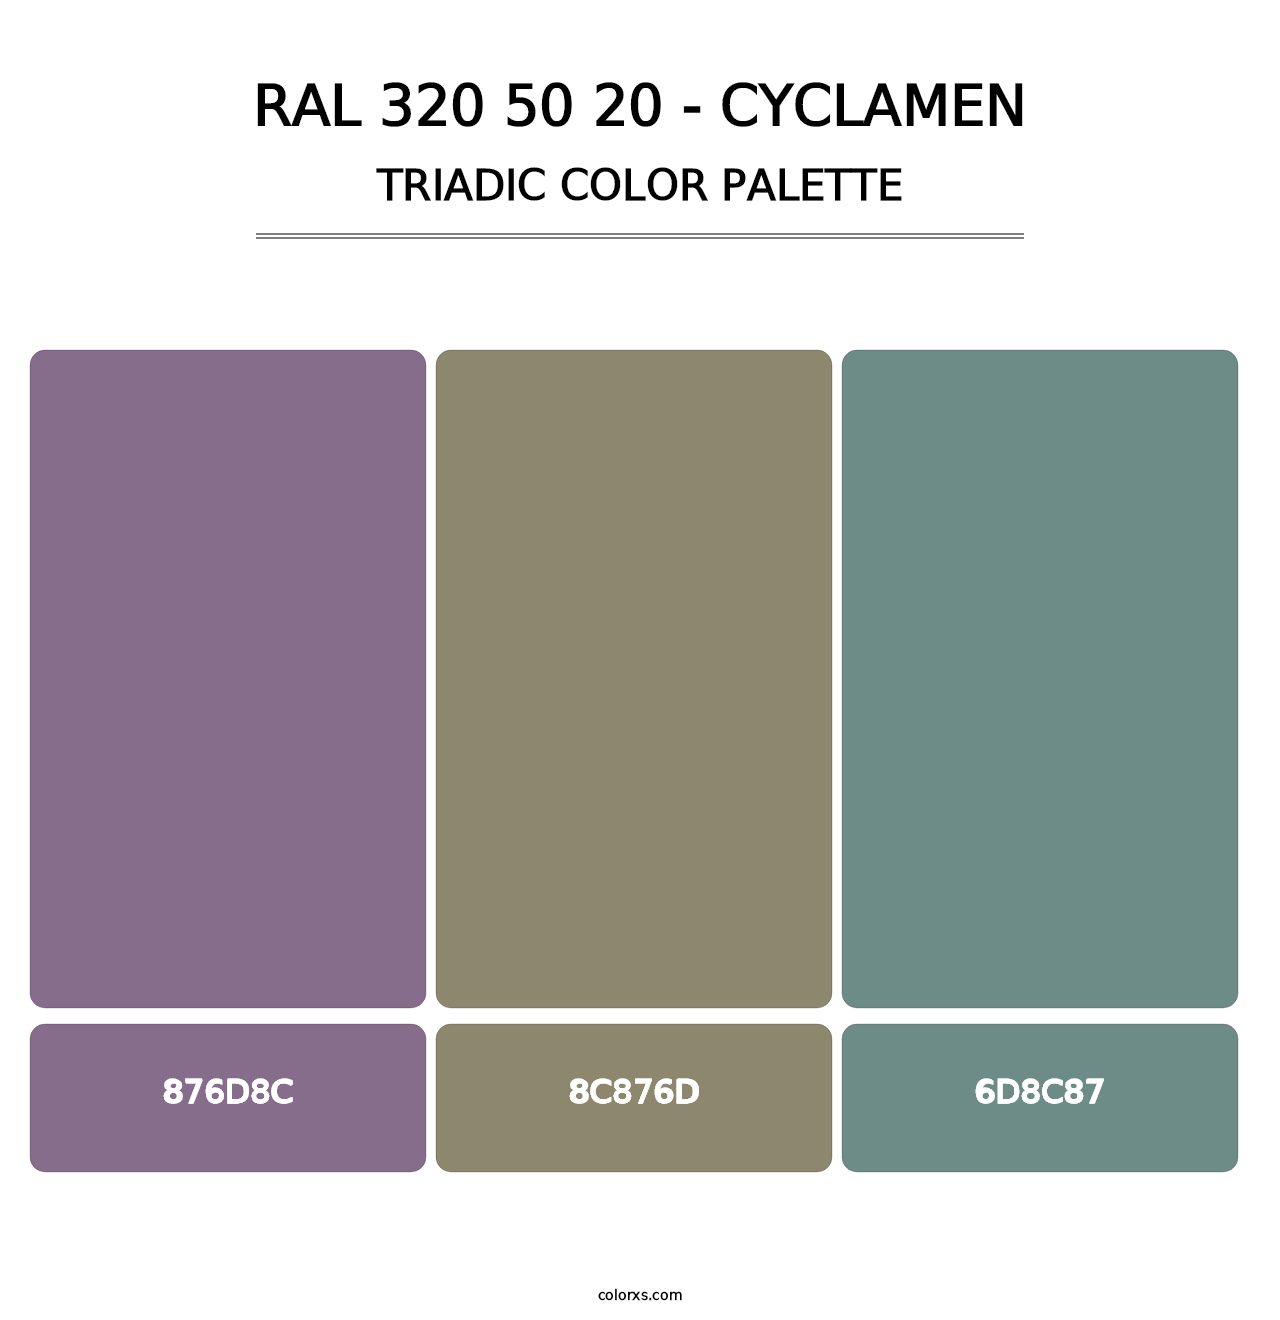 RAL 320 50 20 - Cyclamen - Triadic Color Palette